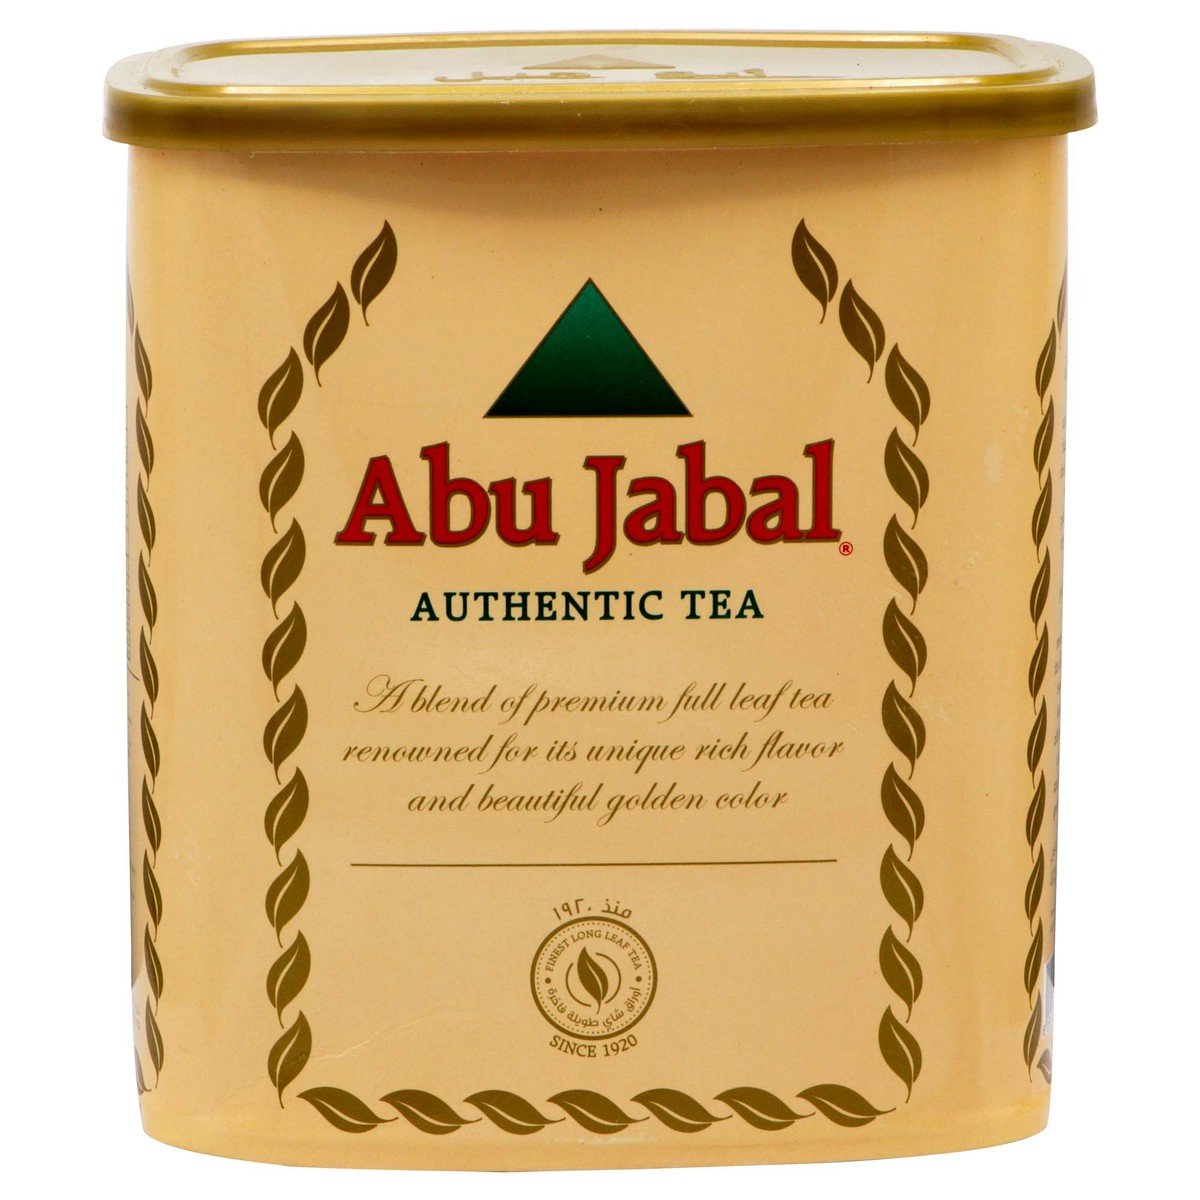 Abu Jabal Authentic Tea 400g